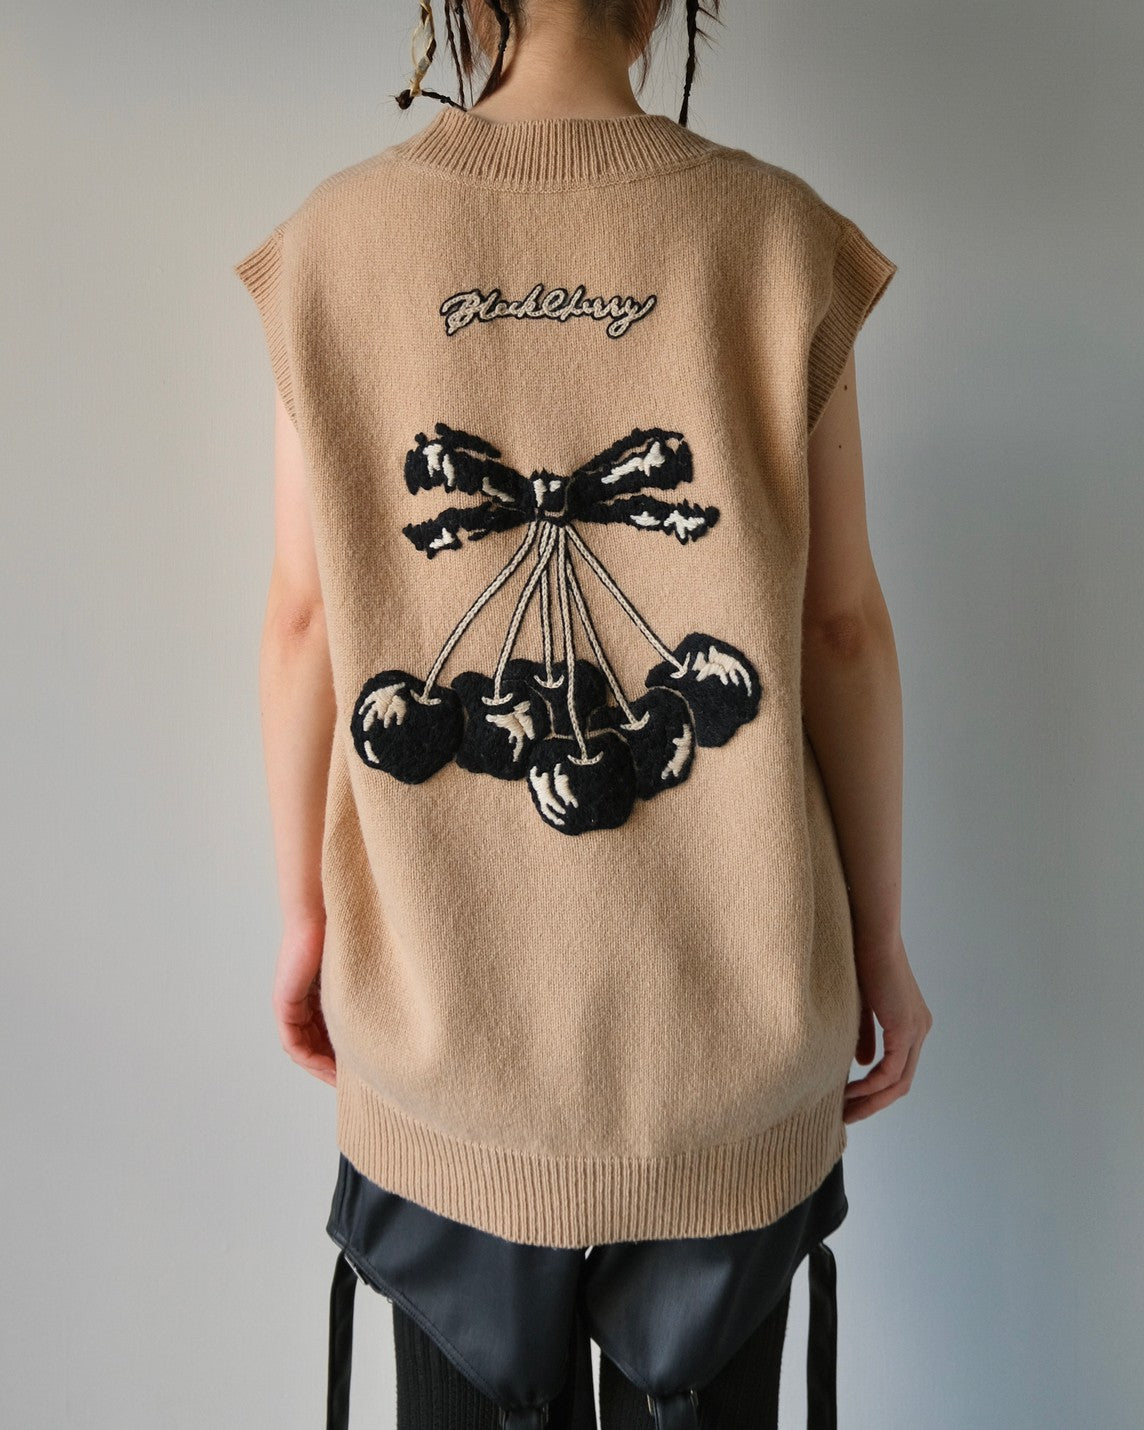 tanakadaisuke BlackCherry hand embroidery vest